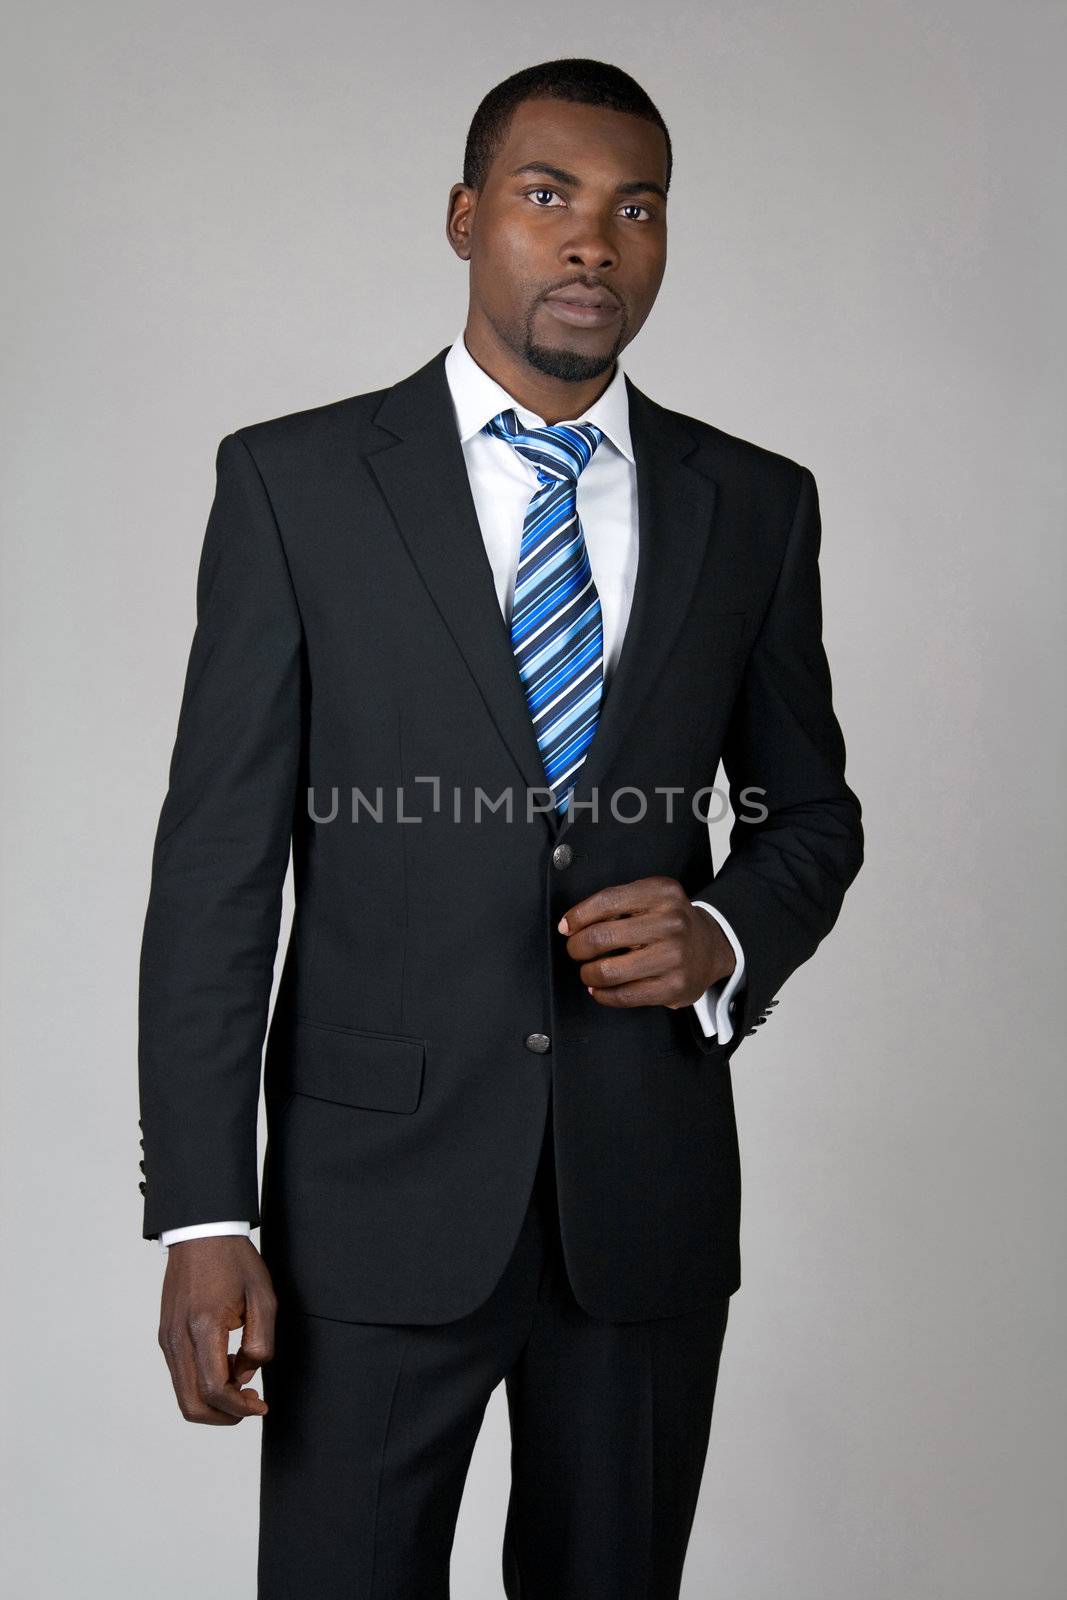 Elegant African American gentleman wearing suit and tie.